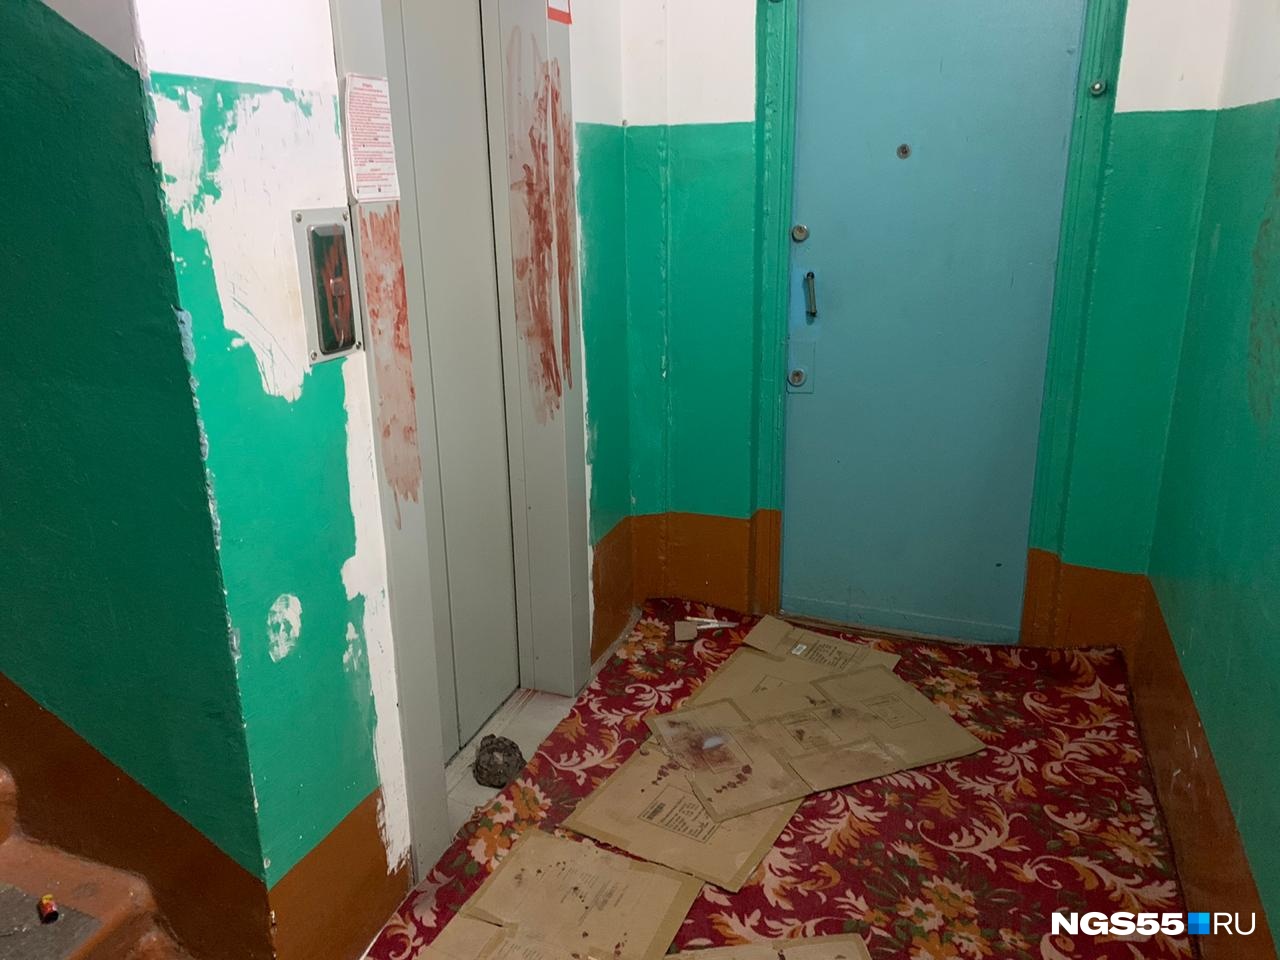 Следком возбудил уголовные дела после нападений на женщин на Левом берегу Омска